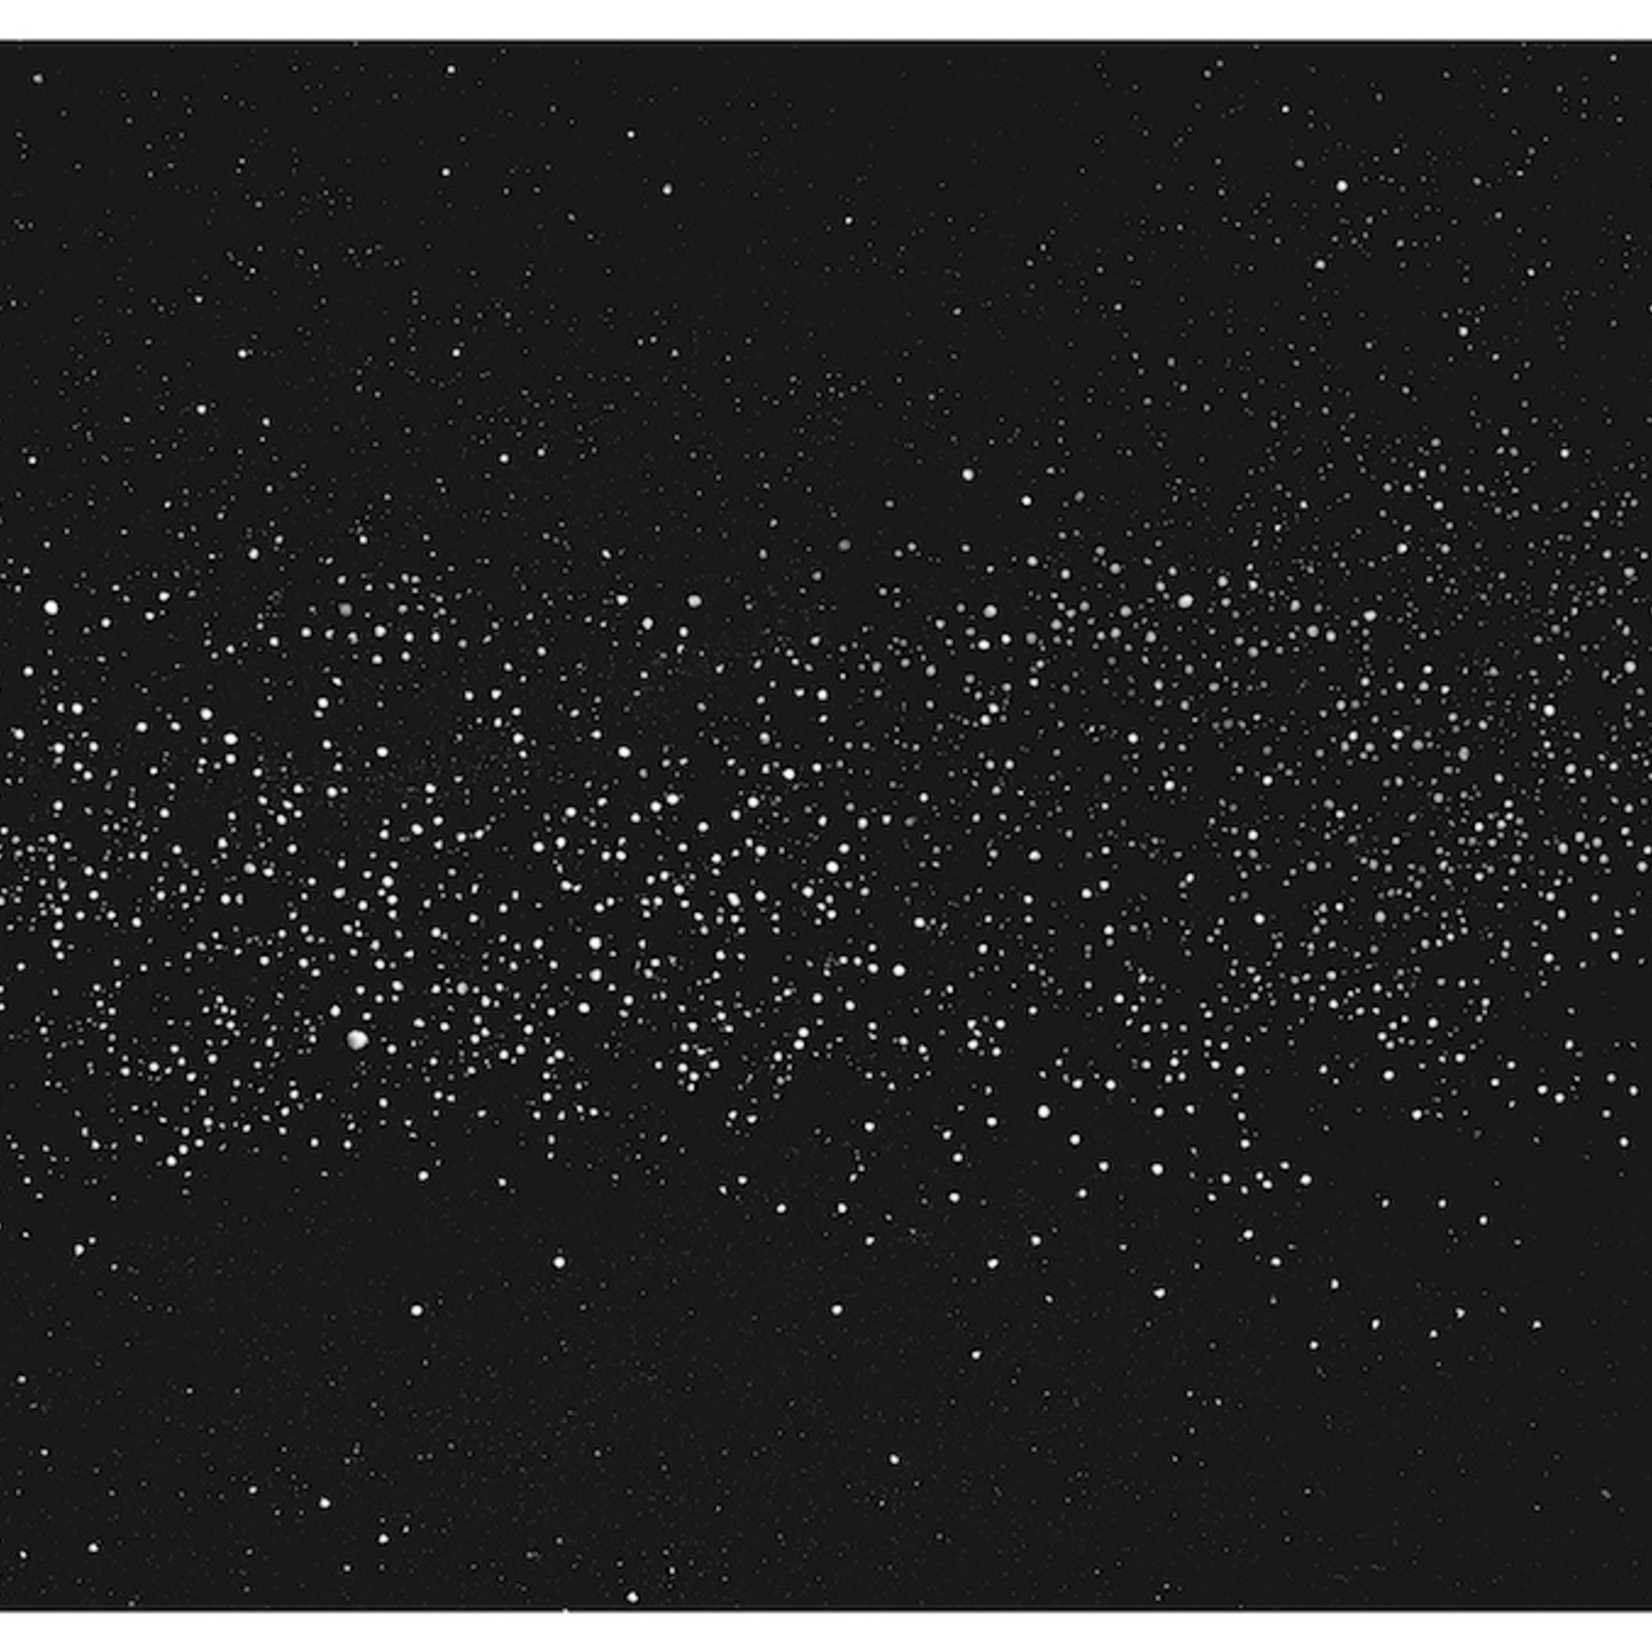 Framed Print on Rag Paper: Sea Constellation by Enric Gener